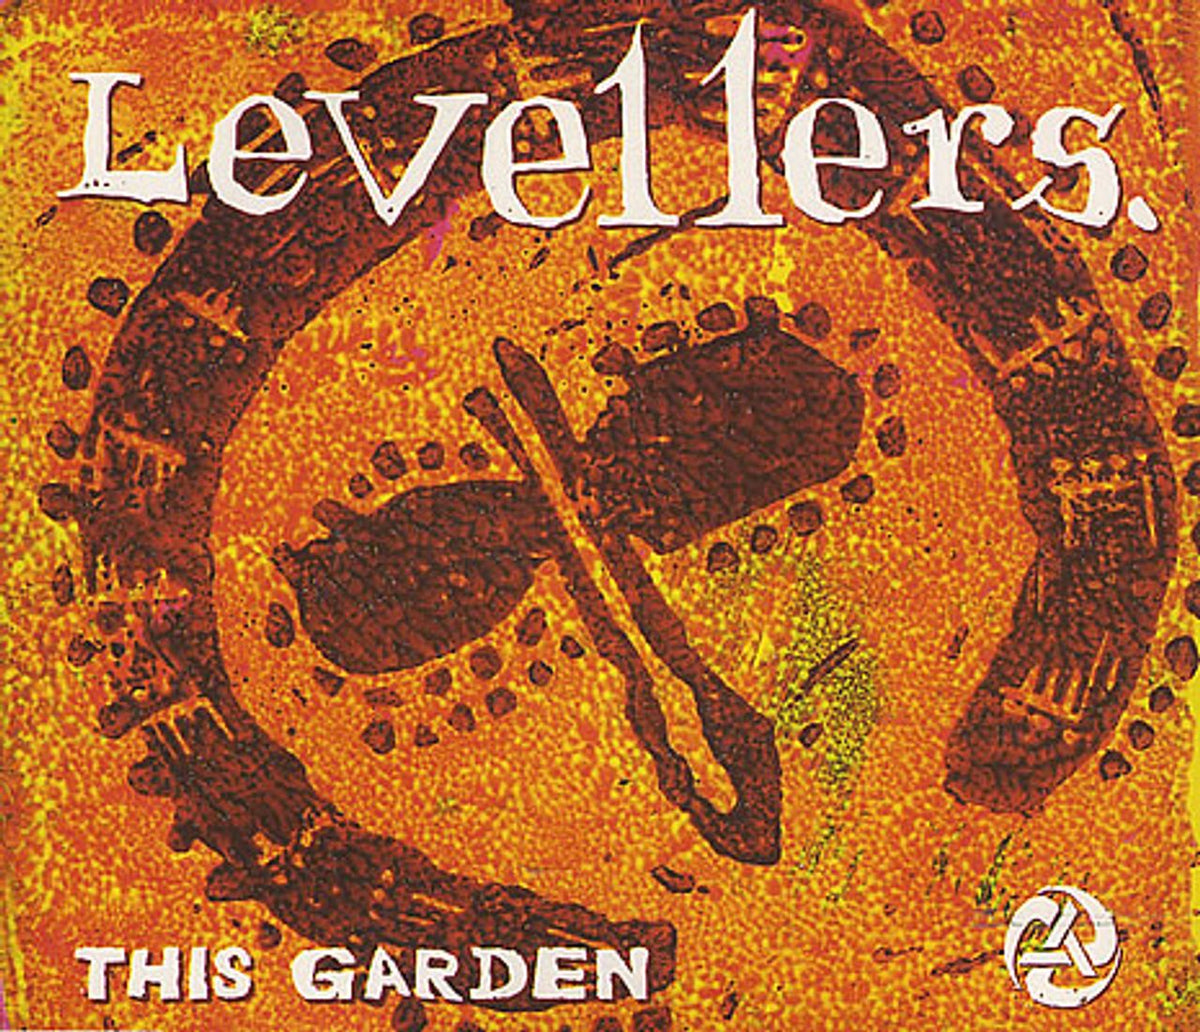 The Levellers This Garden UK CD single — RareVinyl.com